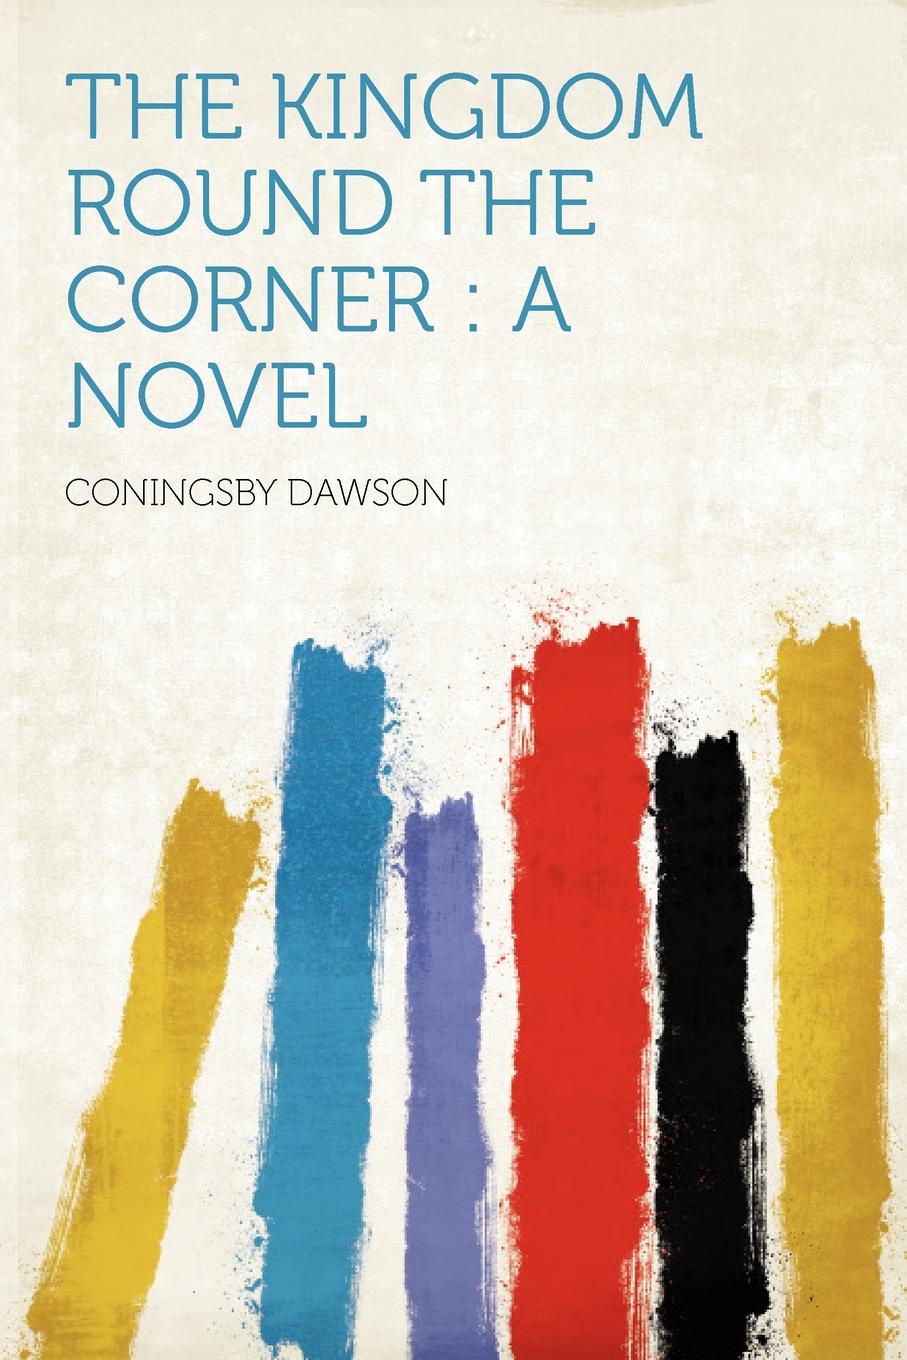 The Kingdom Round the Corner. a Novel